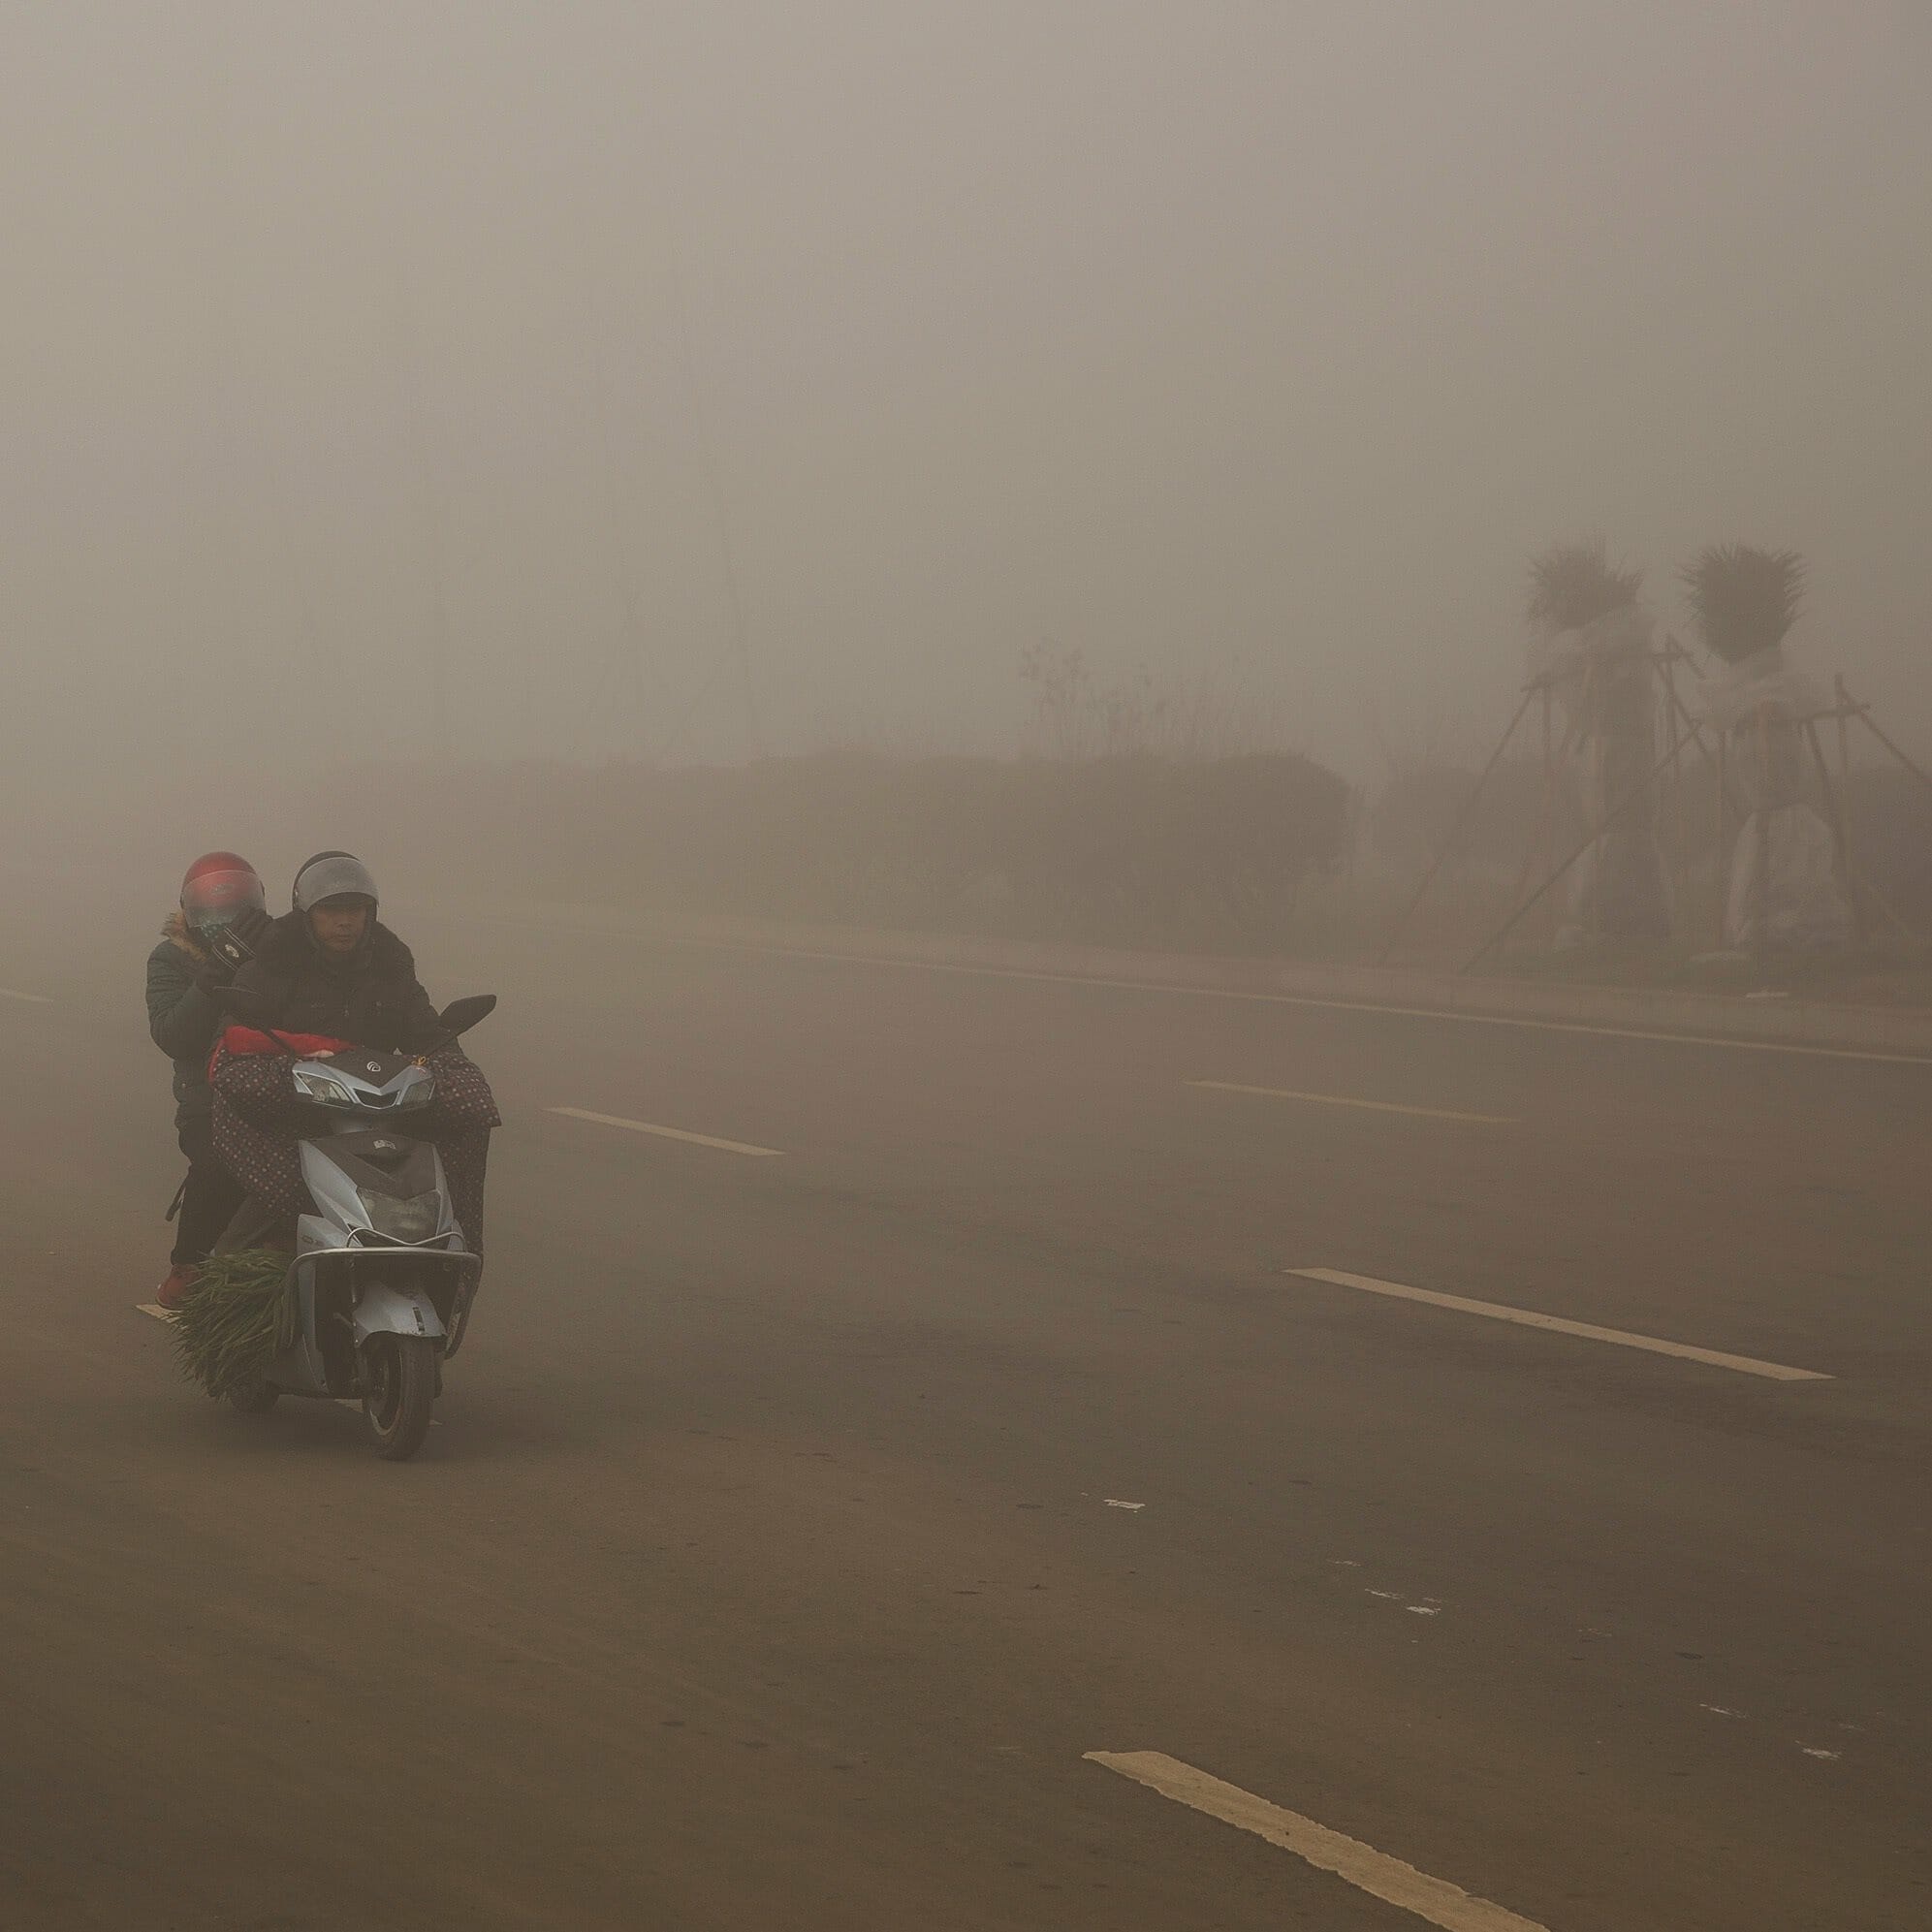 China's Pollution-Based Economy Creates Dangerous Haze